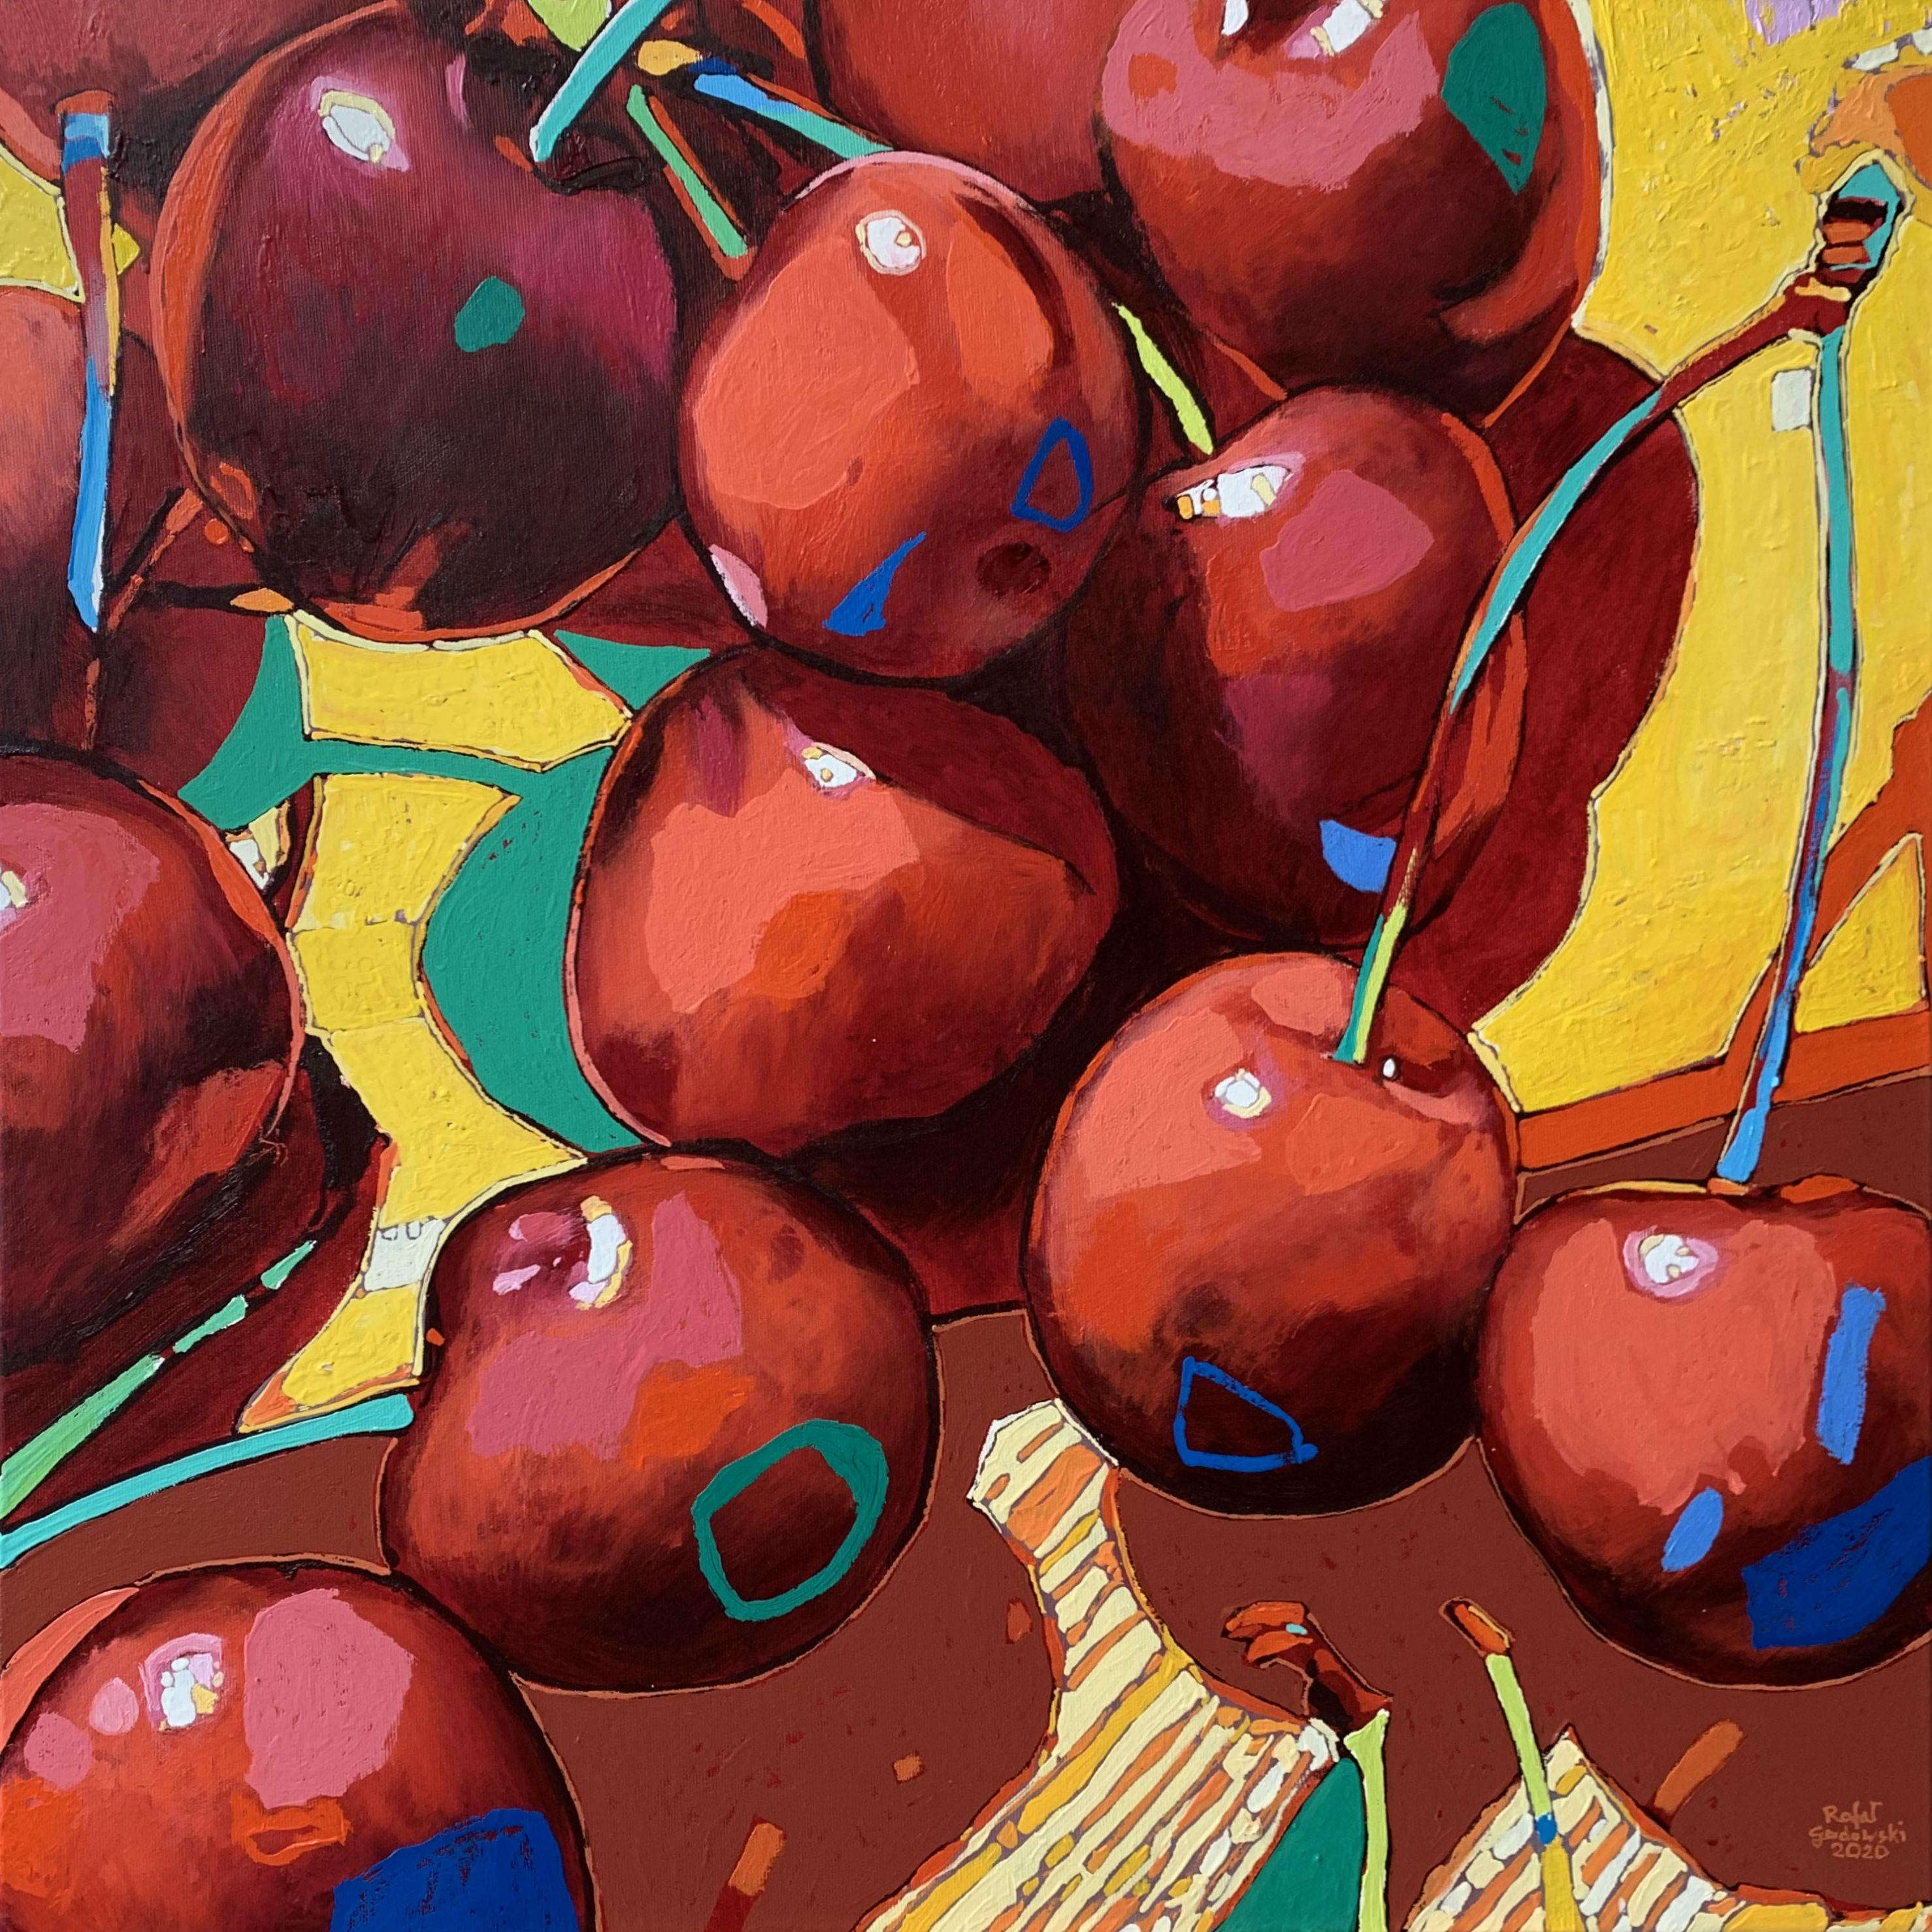 Rafał Gadowski Figurative Painting - Cherries 02 - Contemporary Figurative Oil Painting, Still life, Pop art